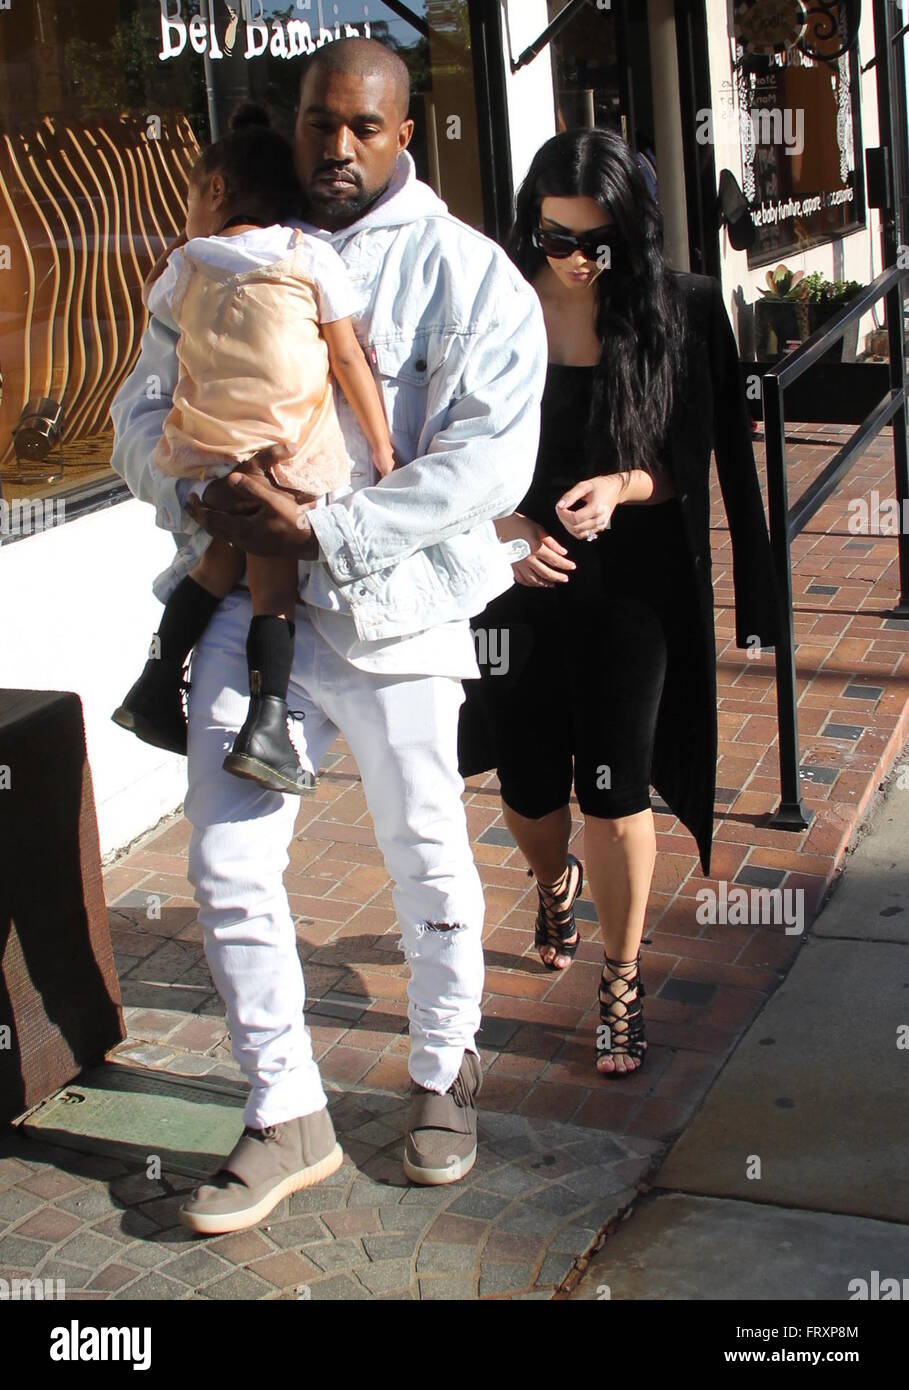 Kim Kardashian and Kanye West shopping at luxury baby boutique Bel Bambini  Featuring: Kim Kardashian, Kanye West, North West Where: Beverly Hills,  California, United States When: 21 Feb 2016 Stock Photo - Alamy